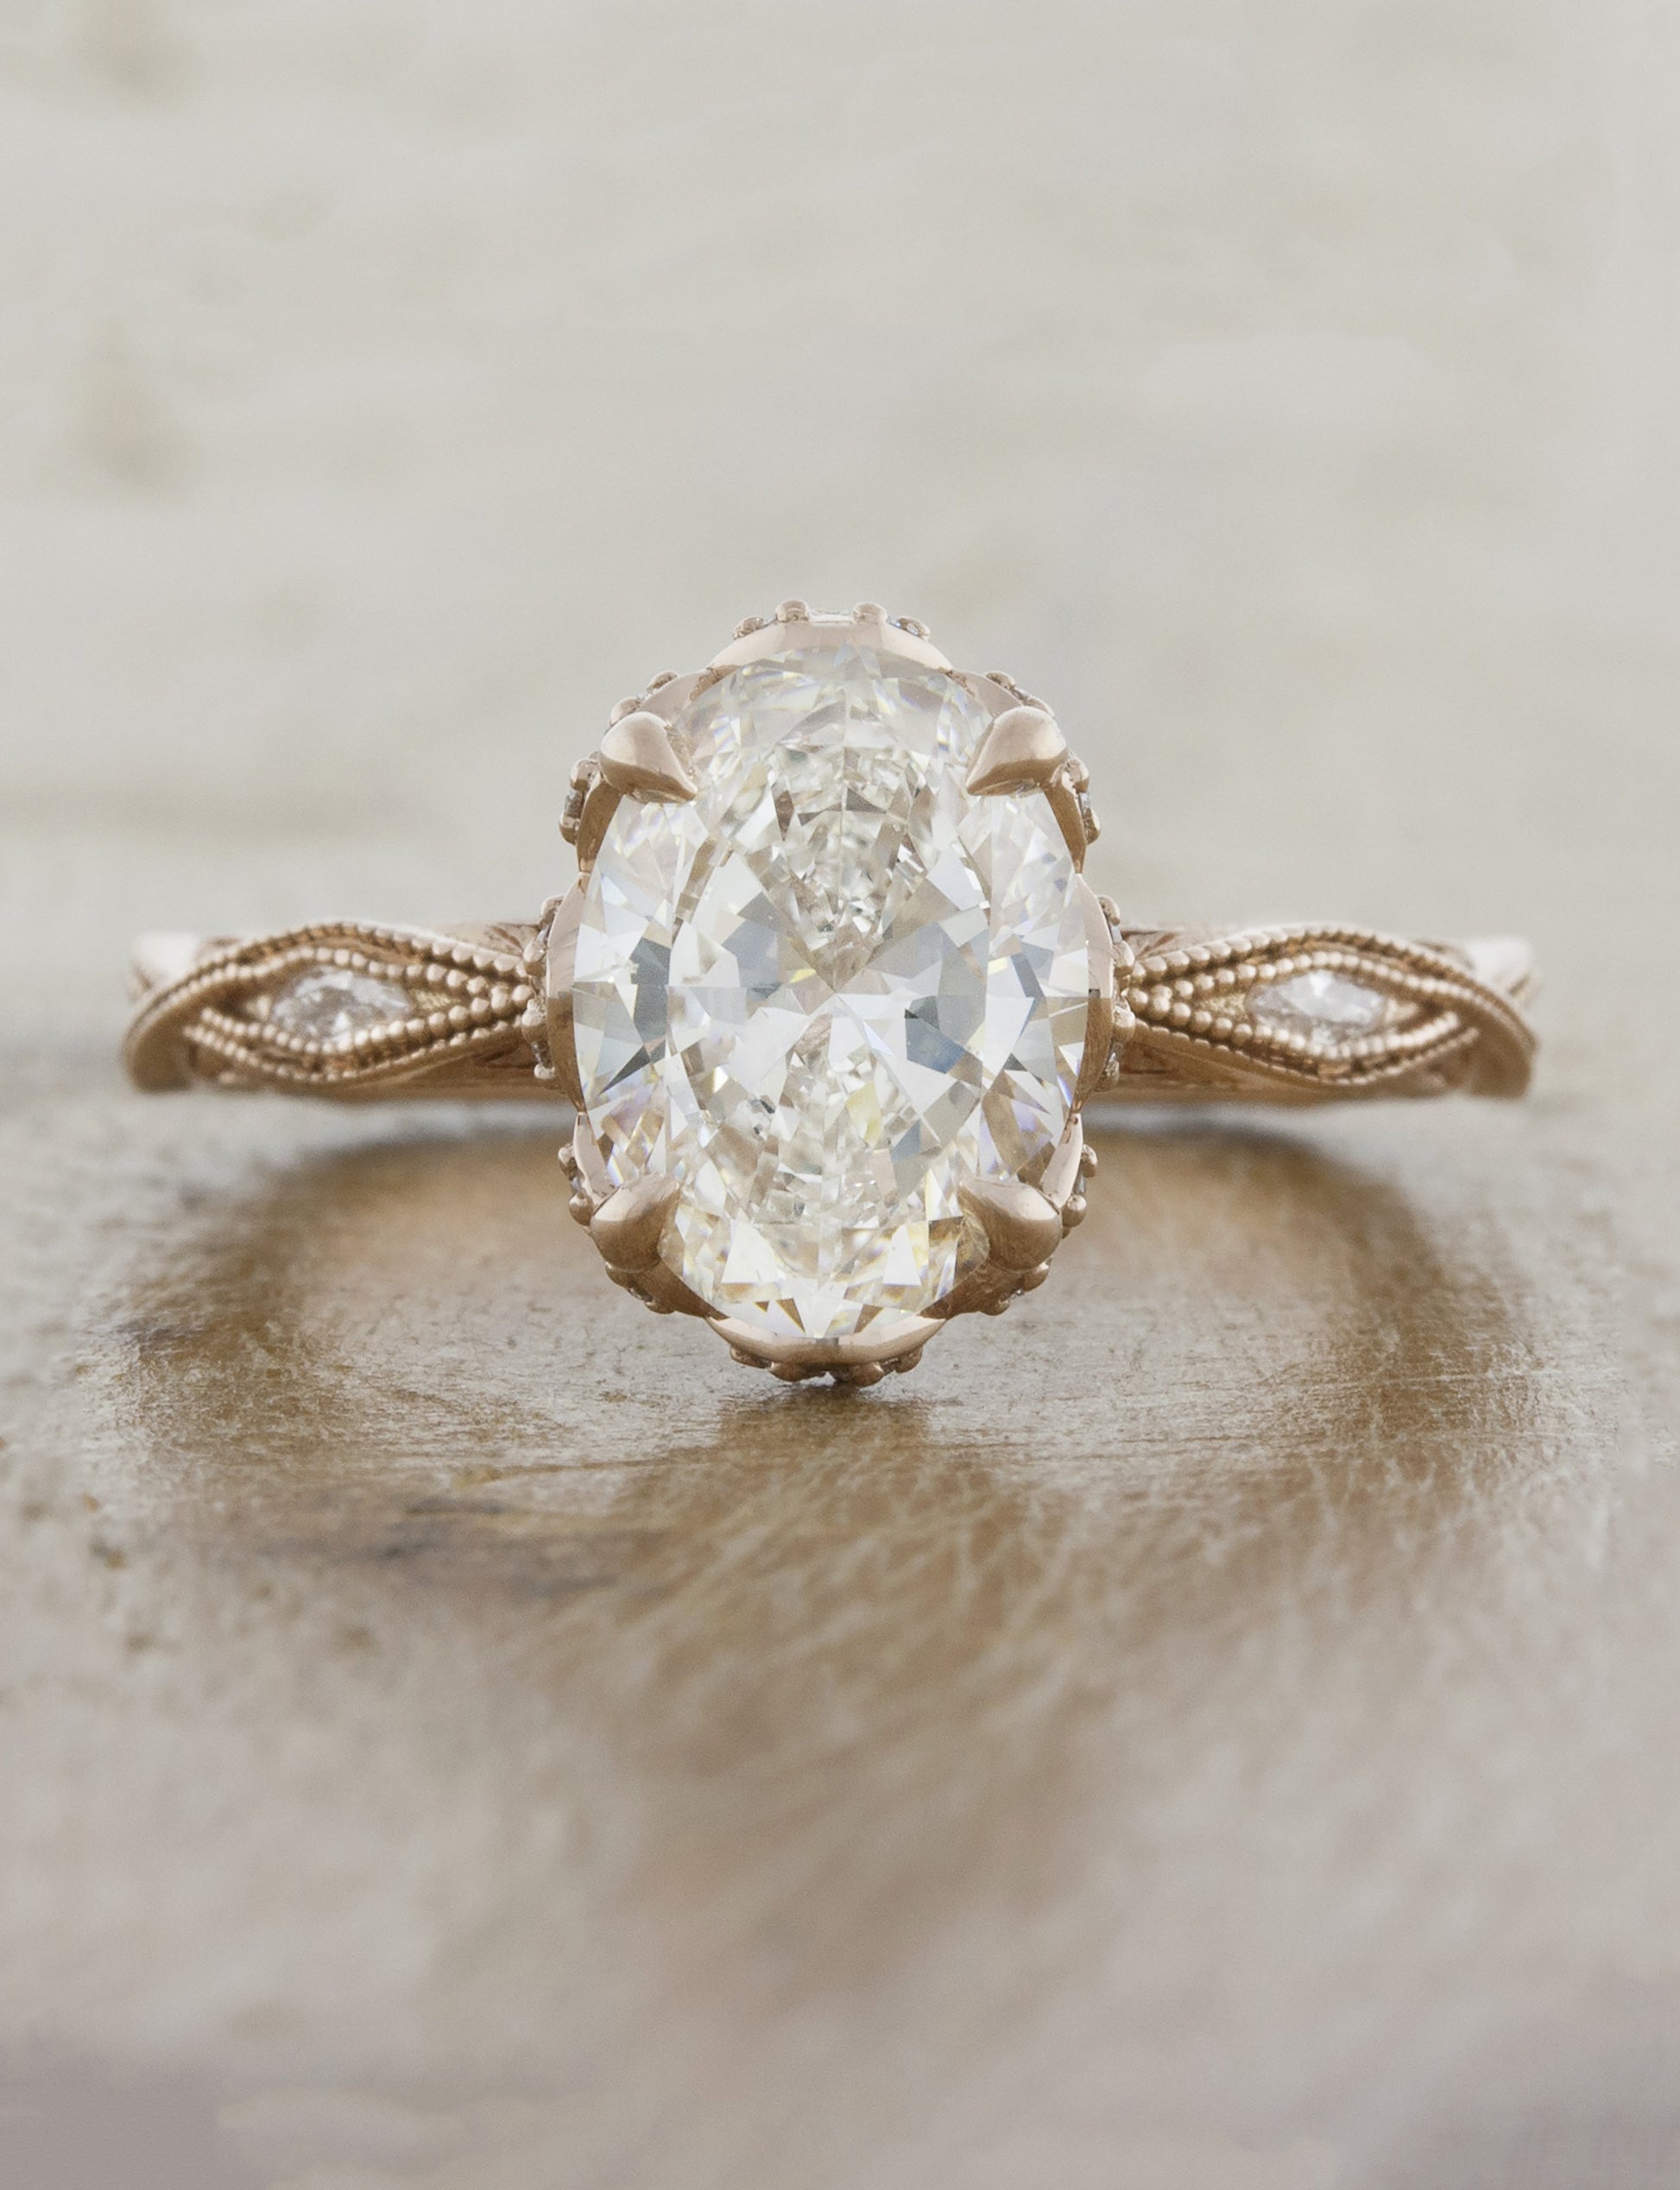 Unique vintage inspired engagement ring milgrain;caption:2.00ct. Oval Diamond 14k Rose Gold